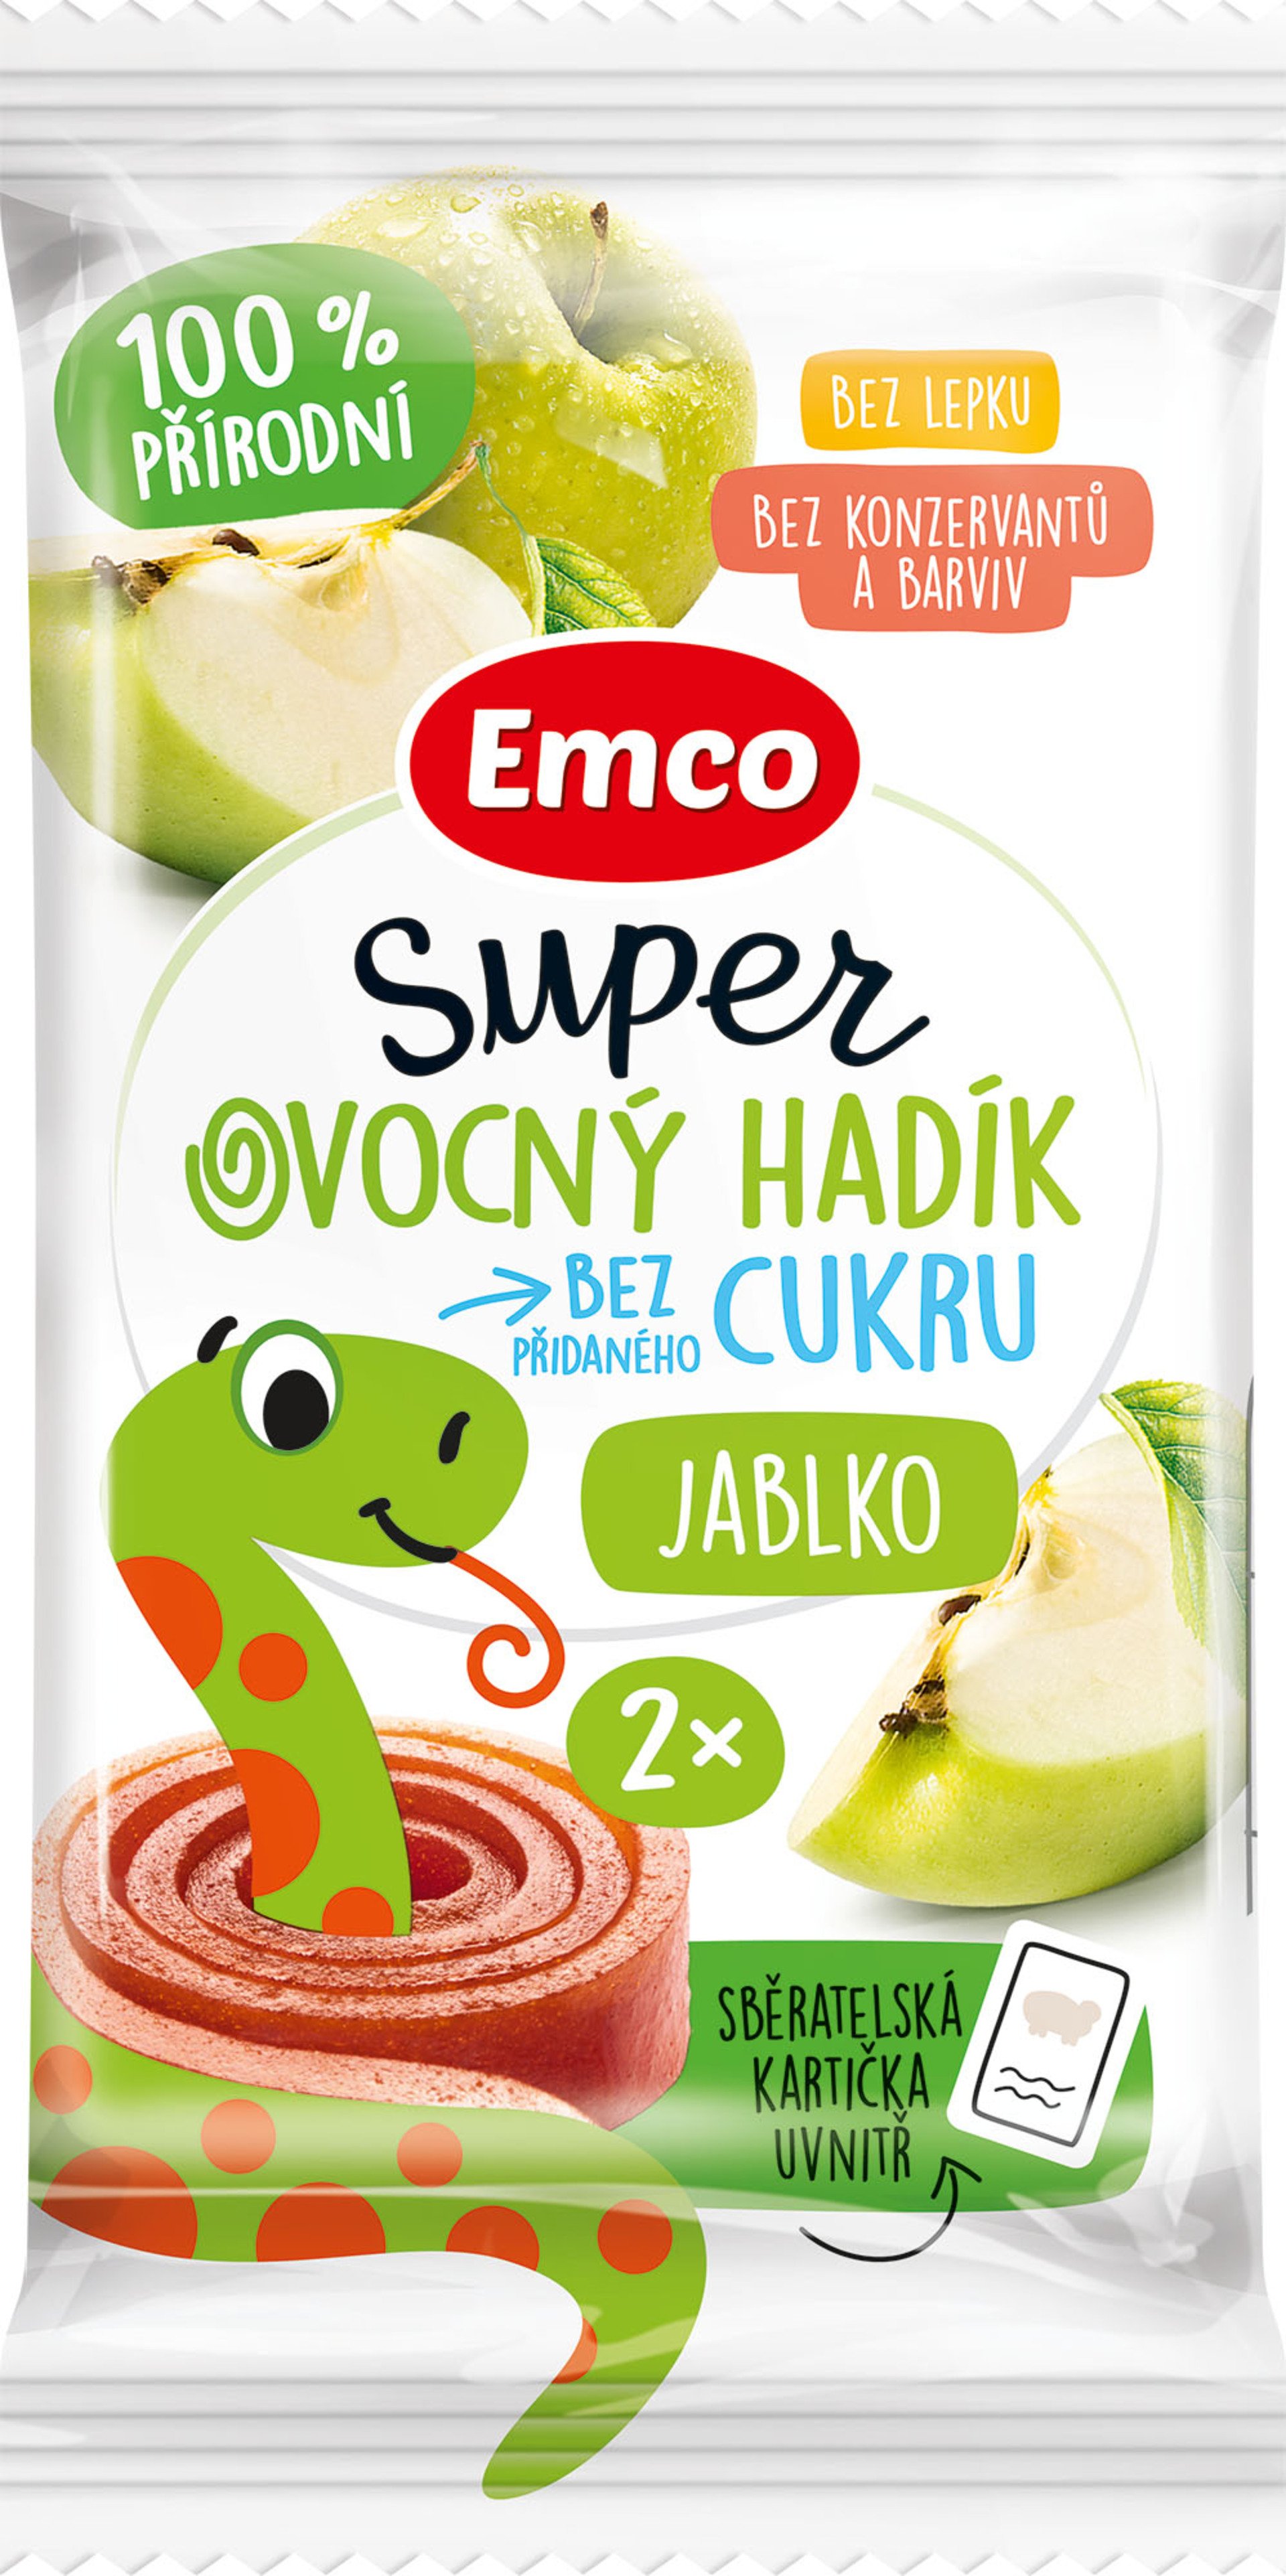 Emco Super ovocný hadík jablko 20 g